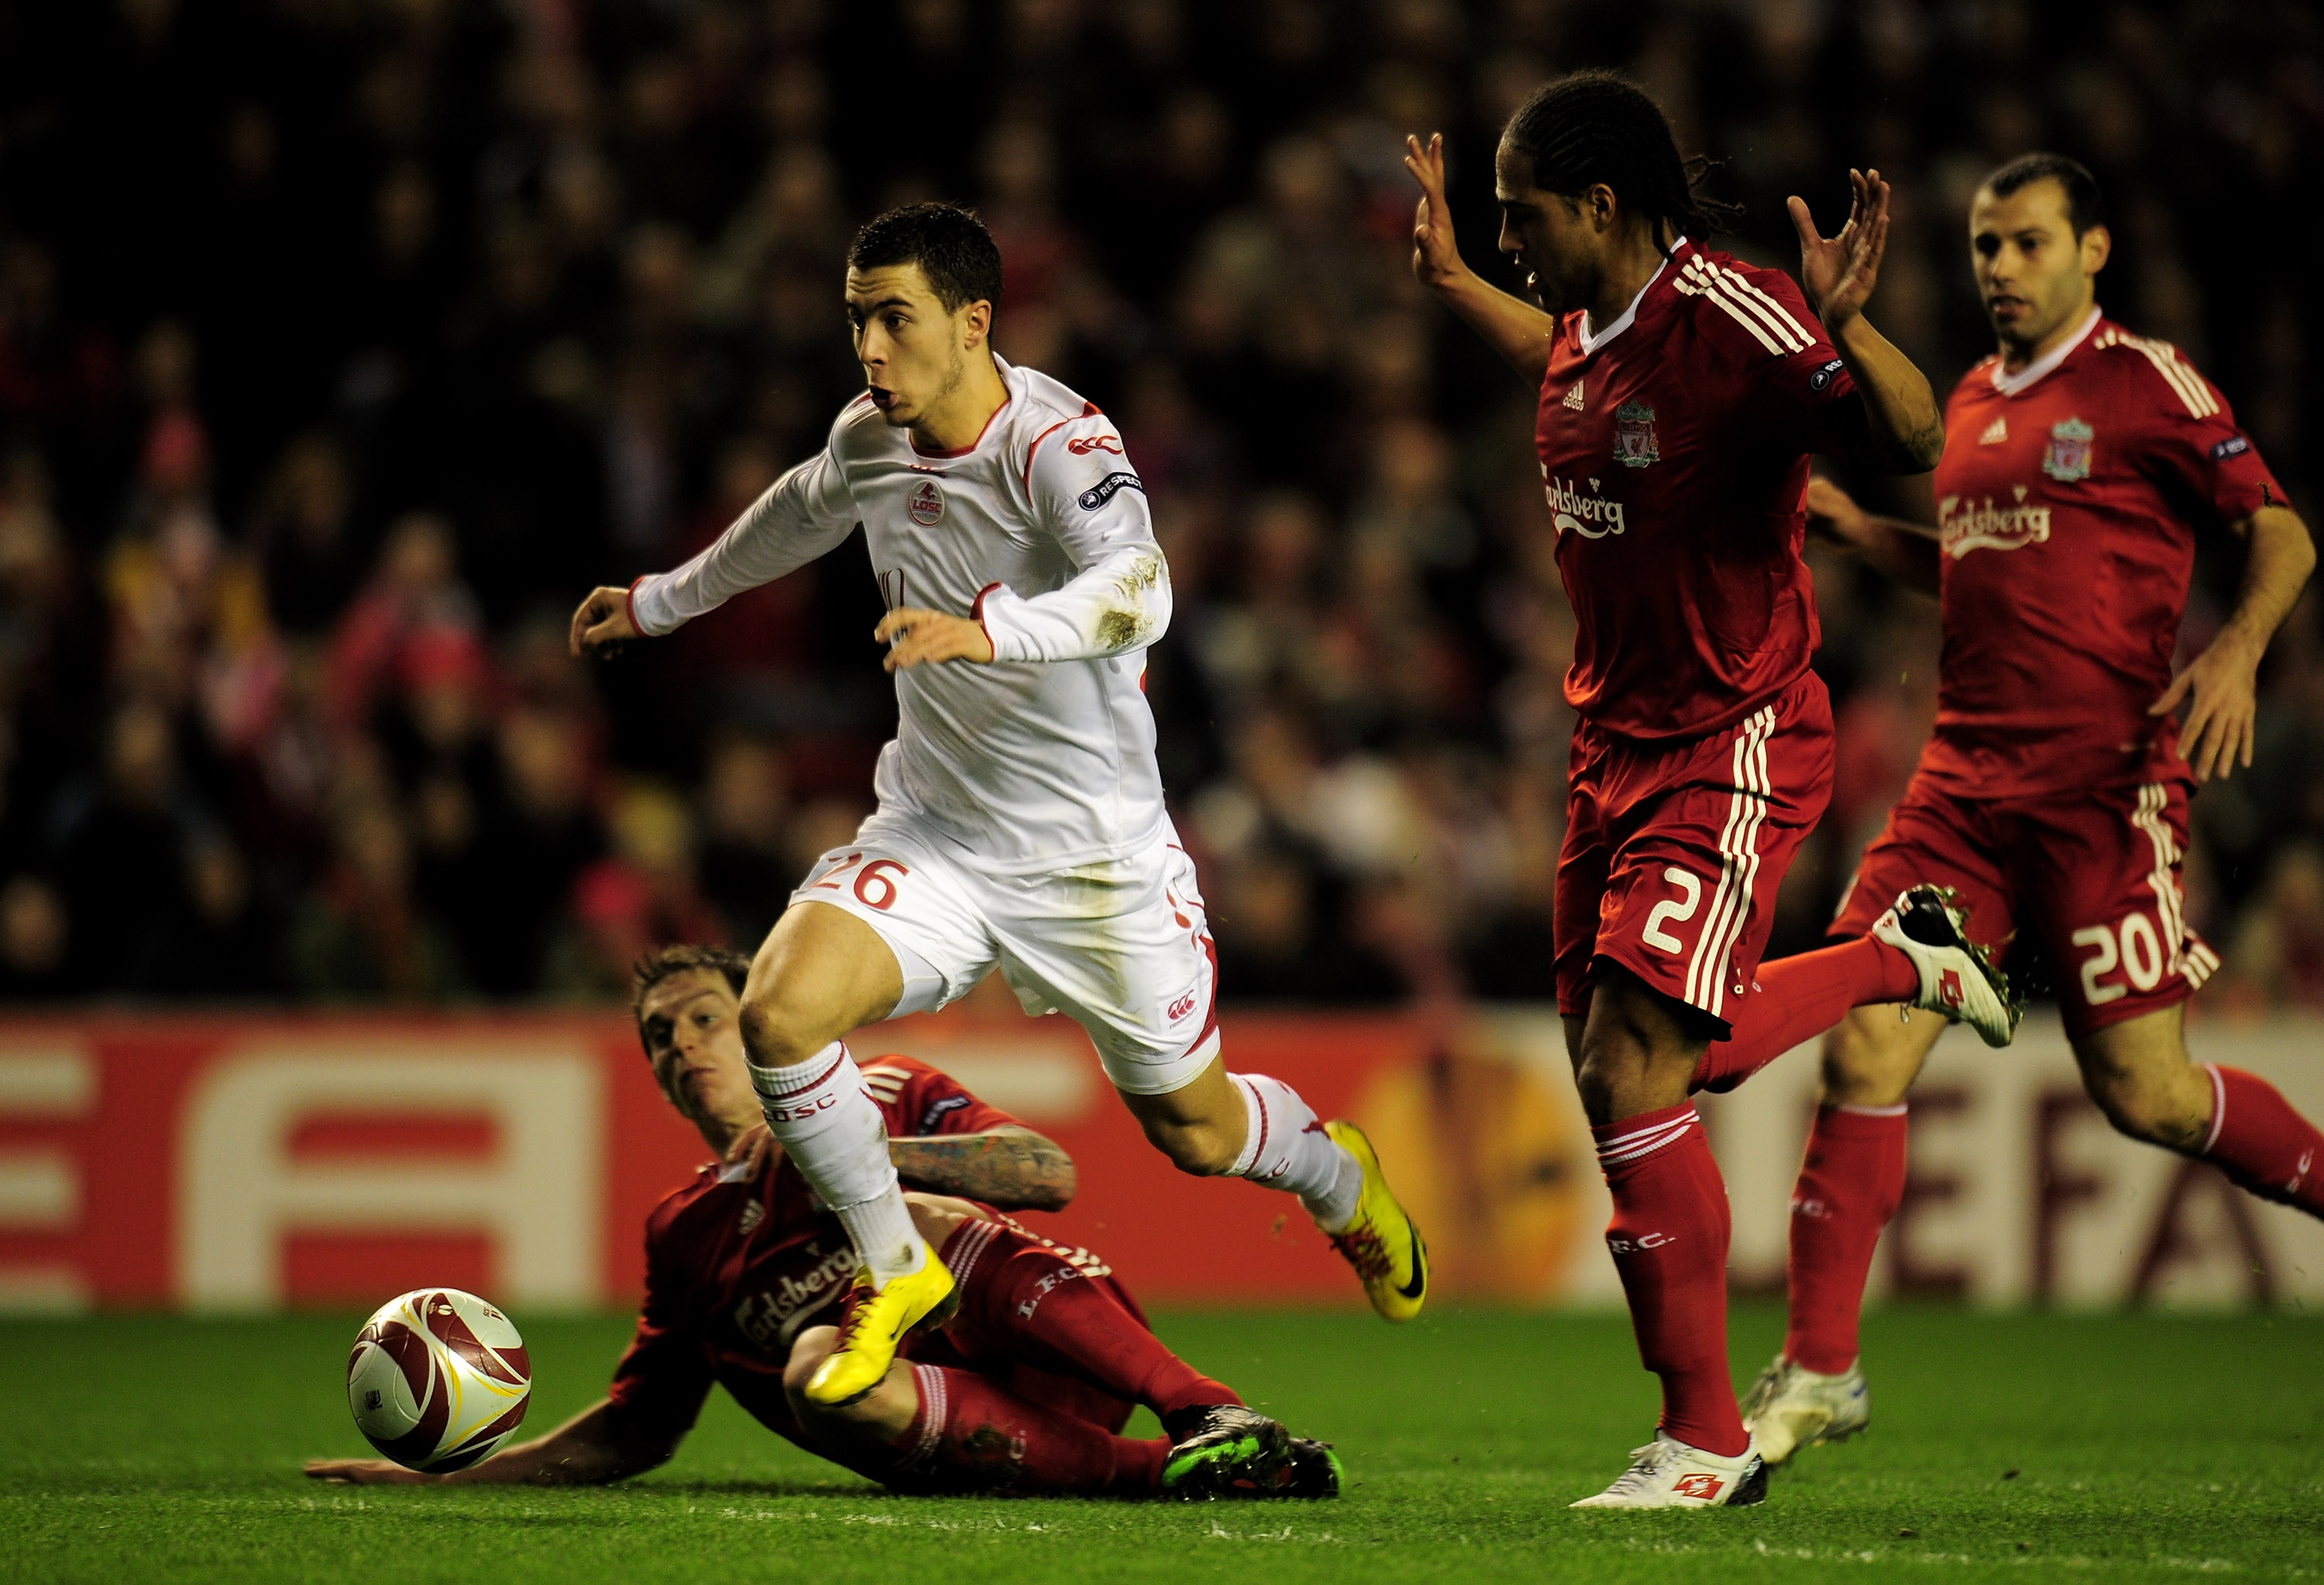 Will Hazard soon be sprinting ahead of Liverpool defenders on a regular basis?